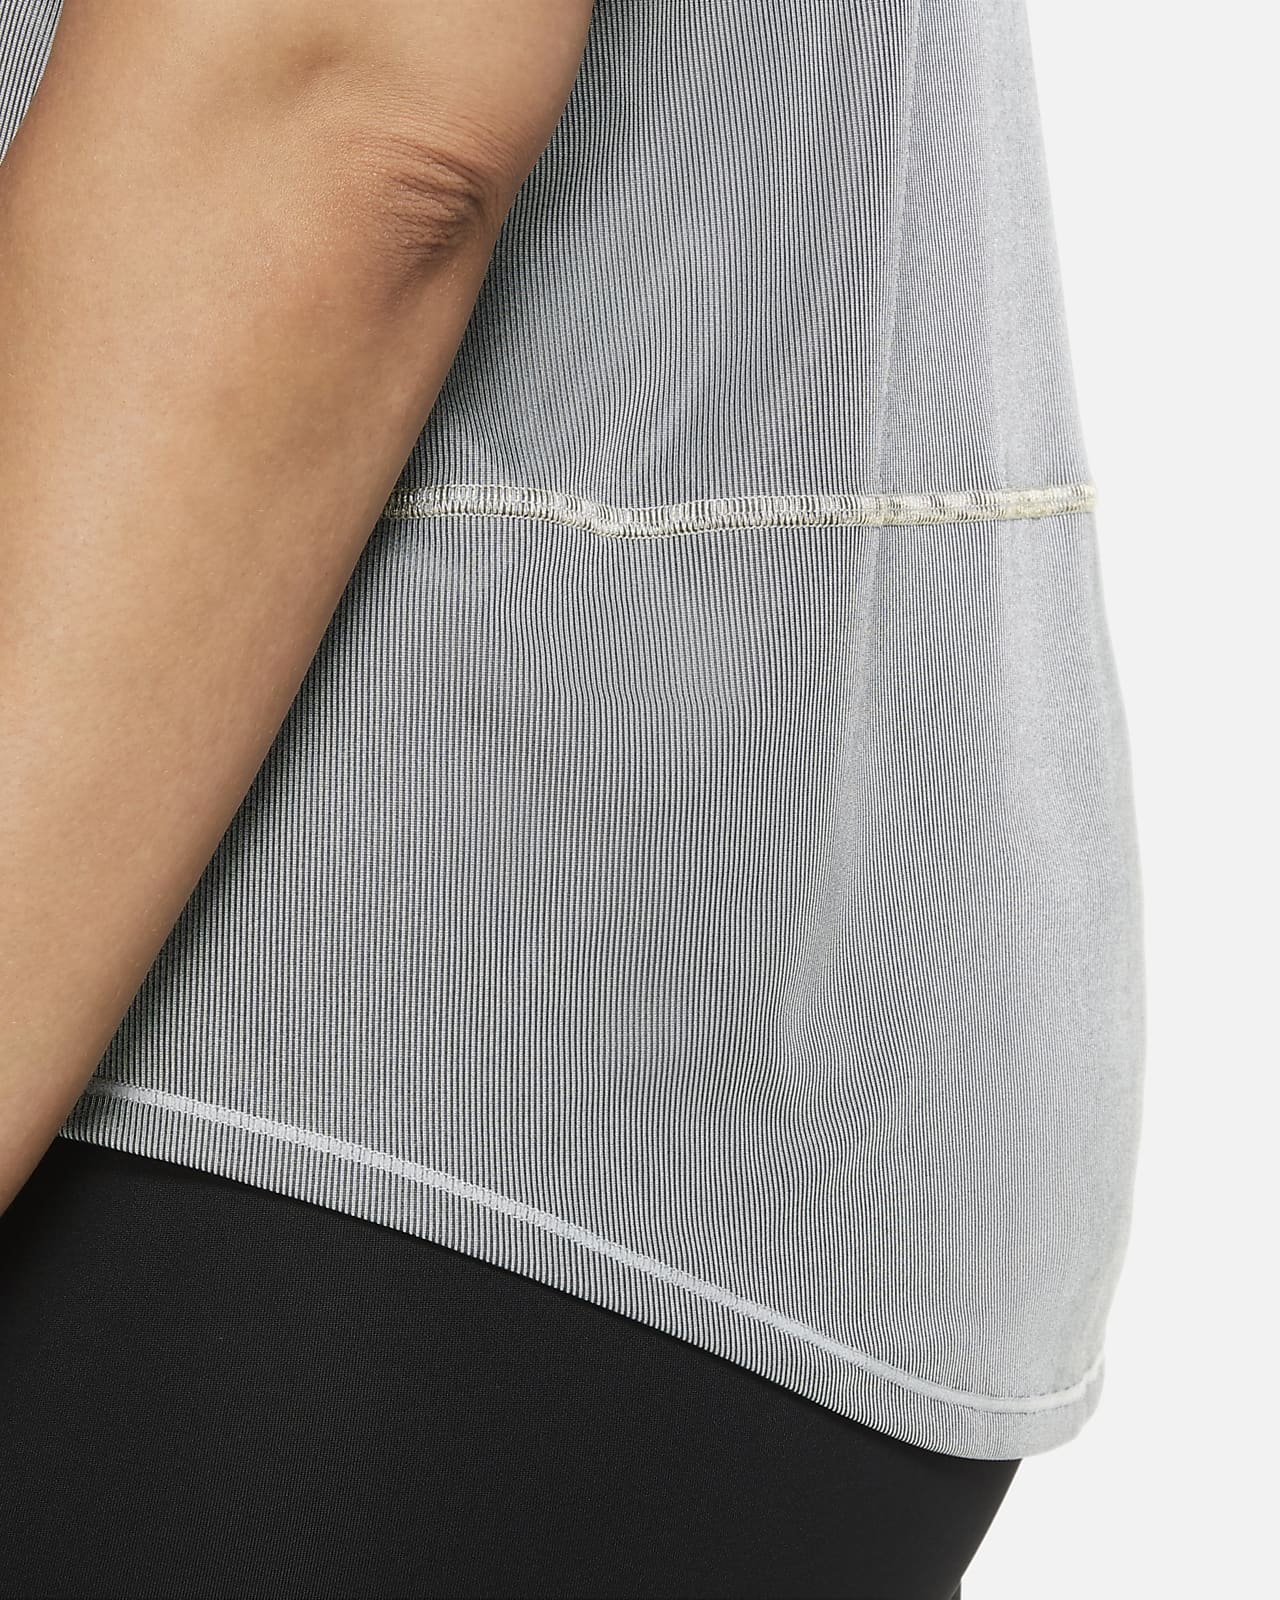 Nike Icon Clash Women's Short-Sleeve 